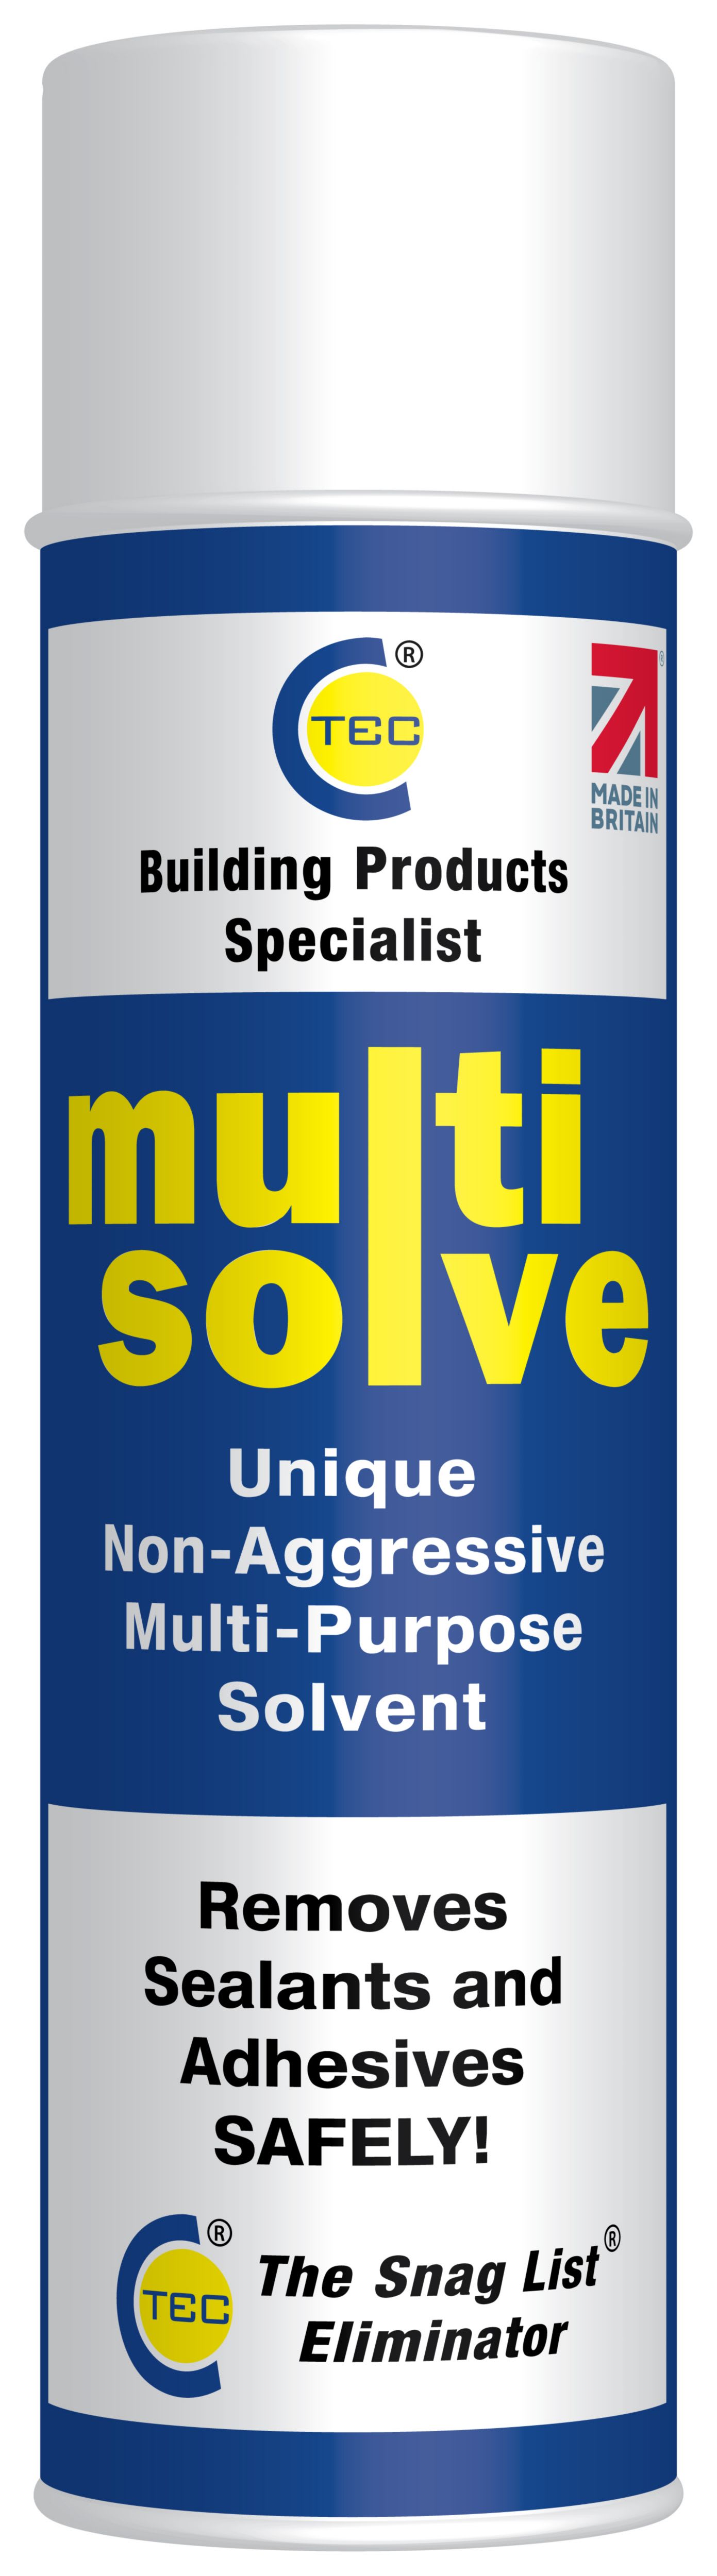 C-Tec Multisolve Non-Aggressive Multi-Purpose Solvent - 500ml